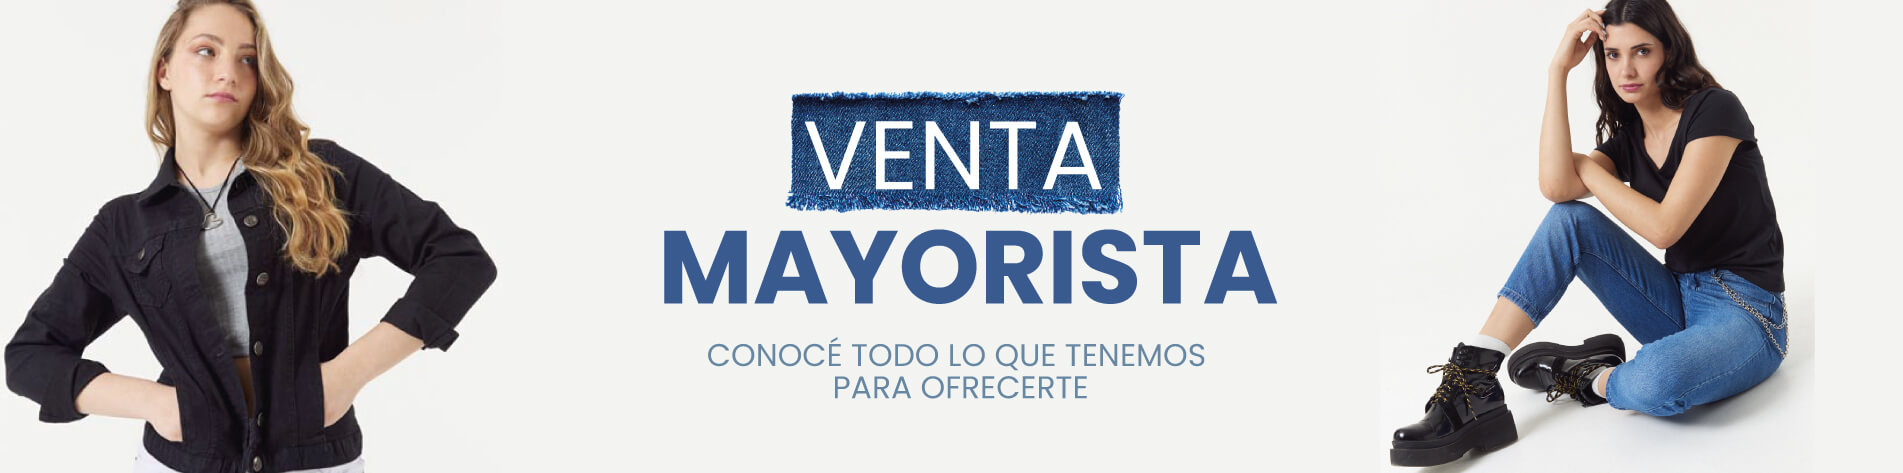 banner mayorista